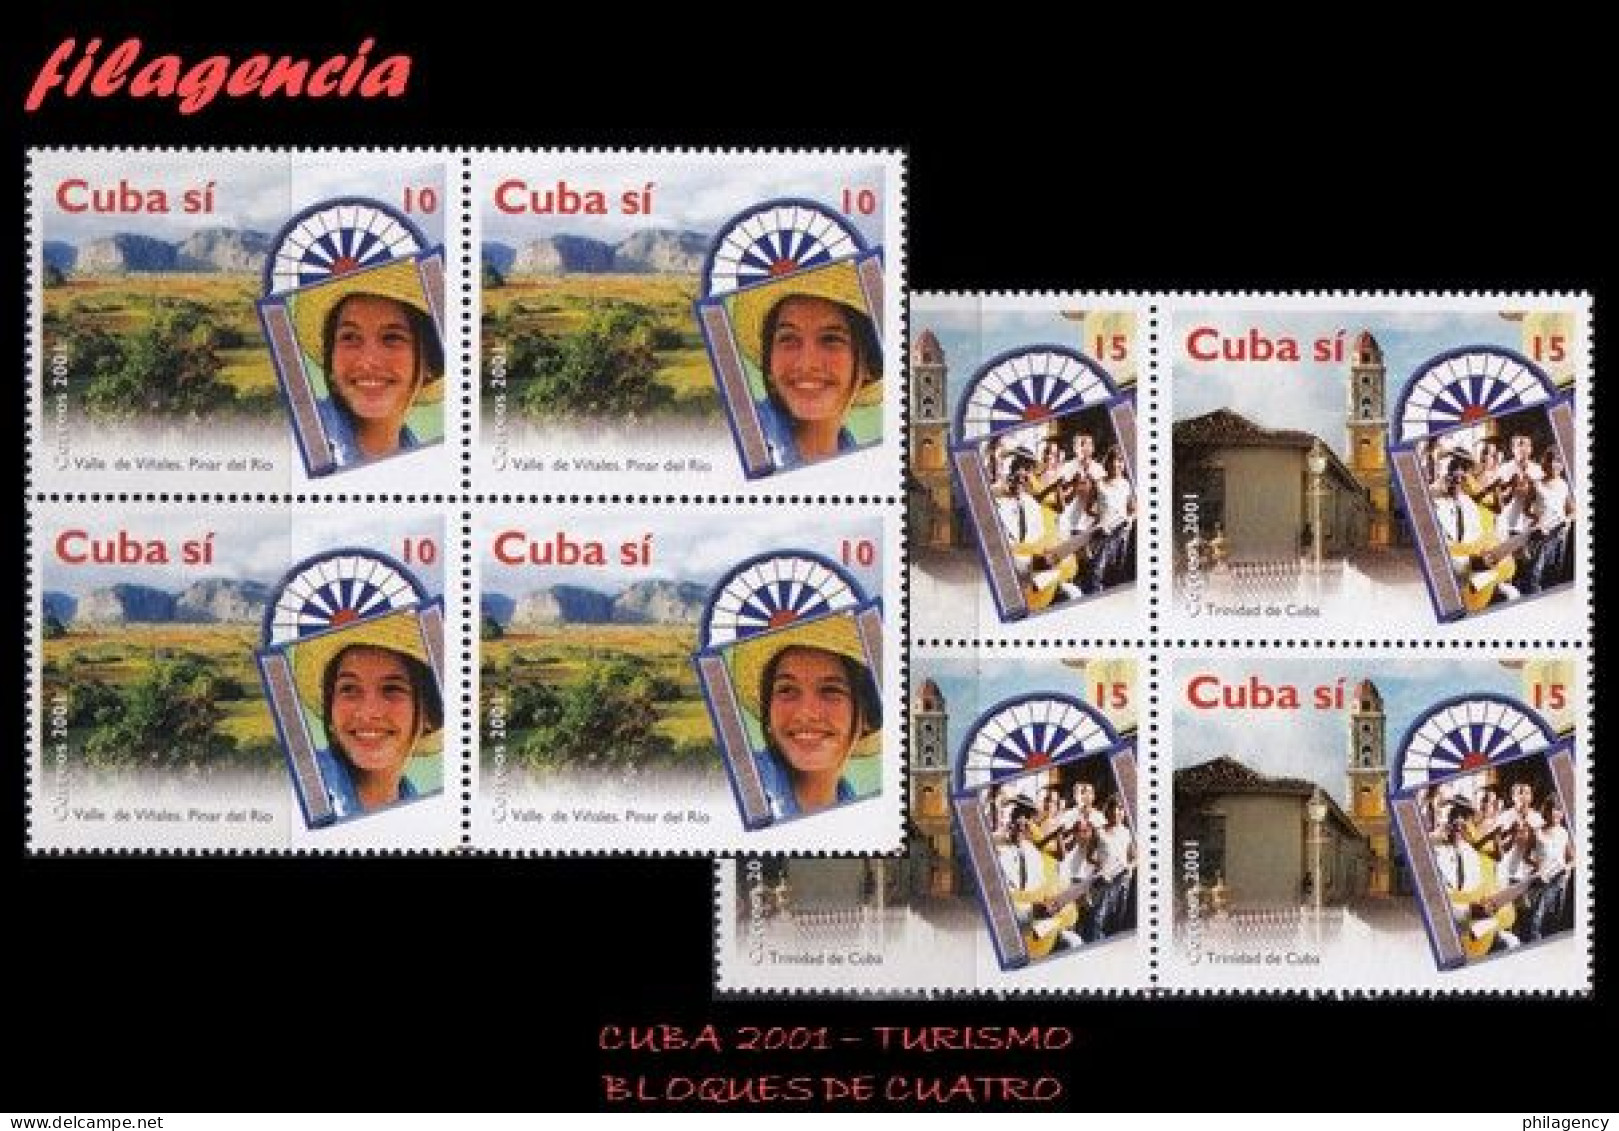 CUBA. BLOQUES DE CUATRO. 2001-17 TURISMO. PAISAJES DE CUBA - Unused Stamps